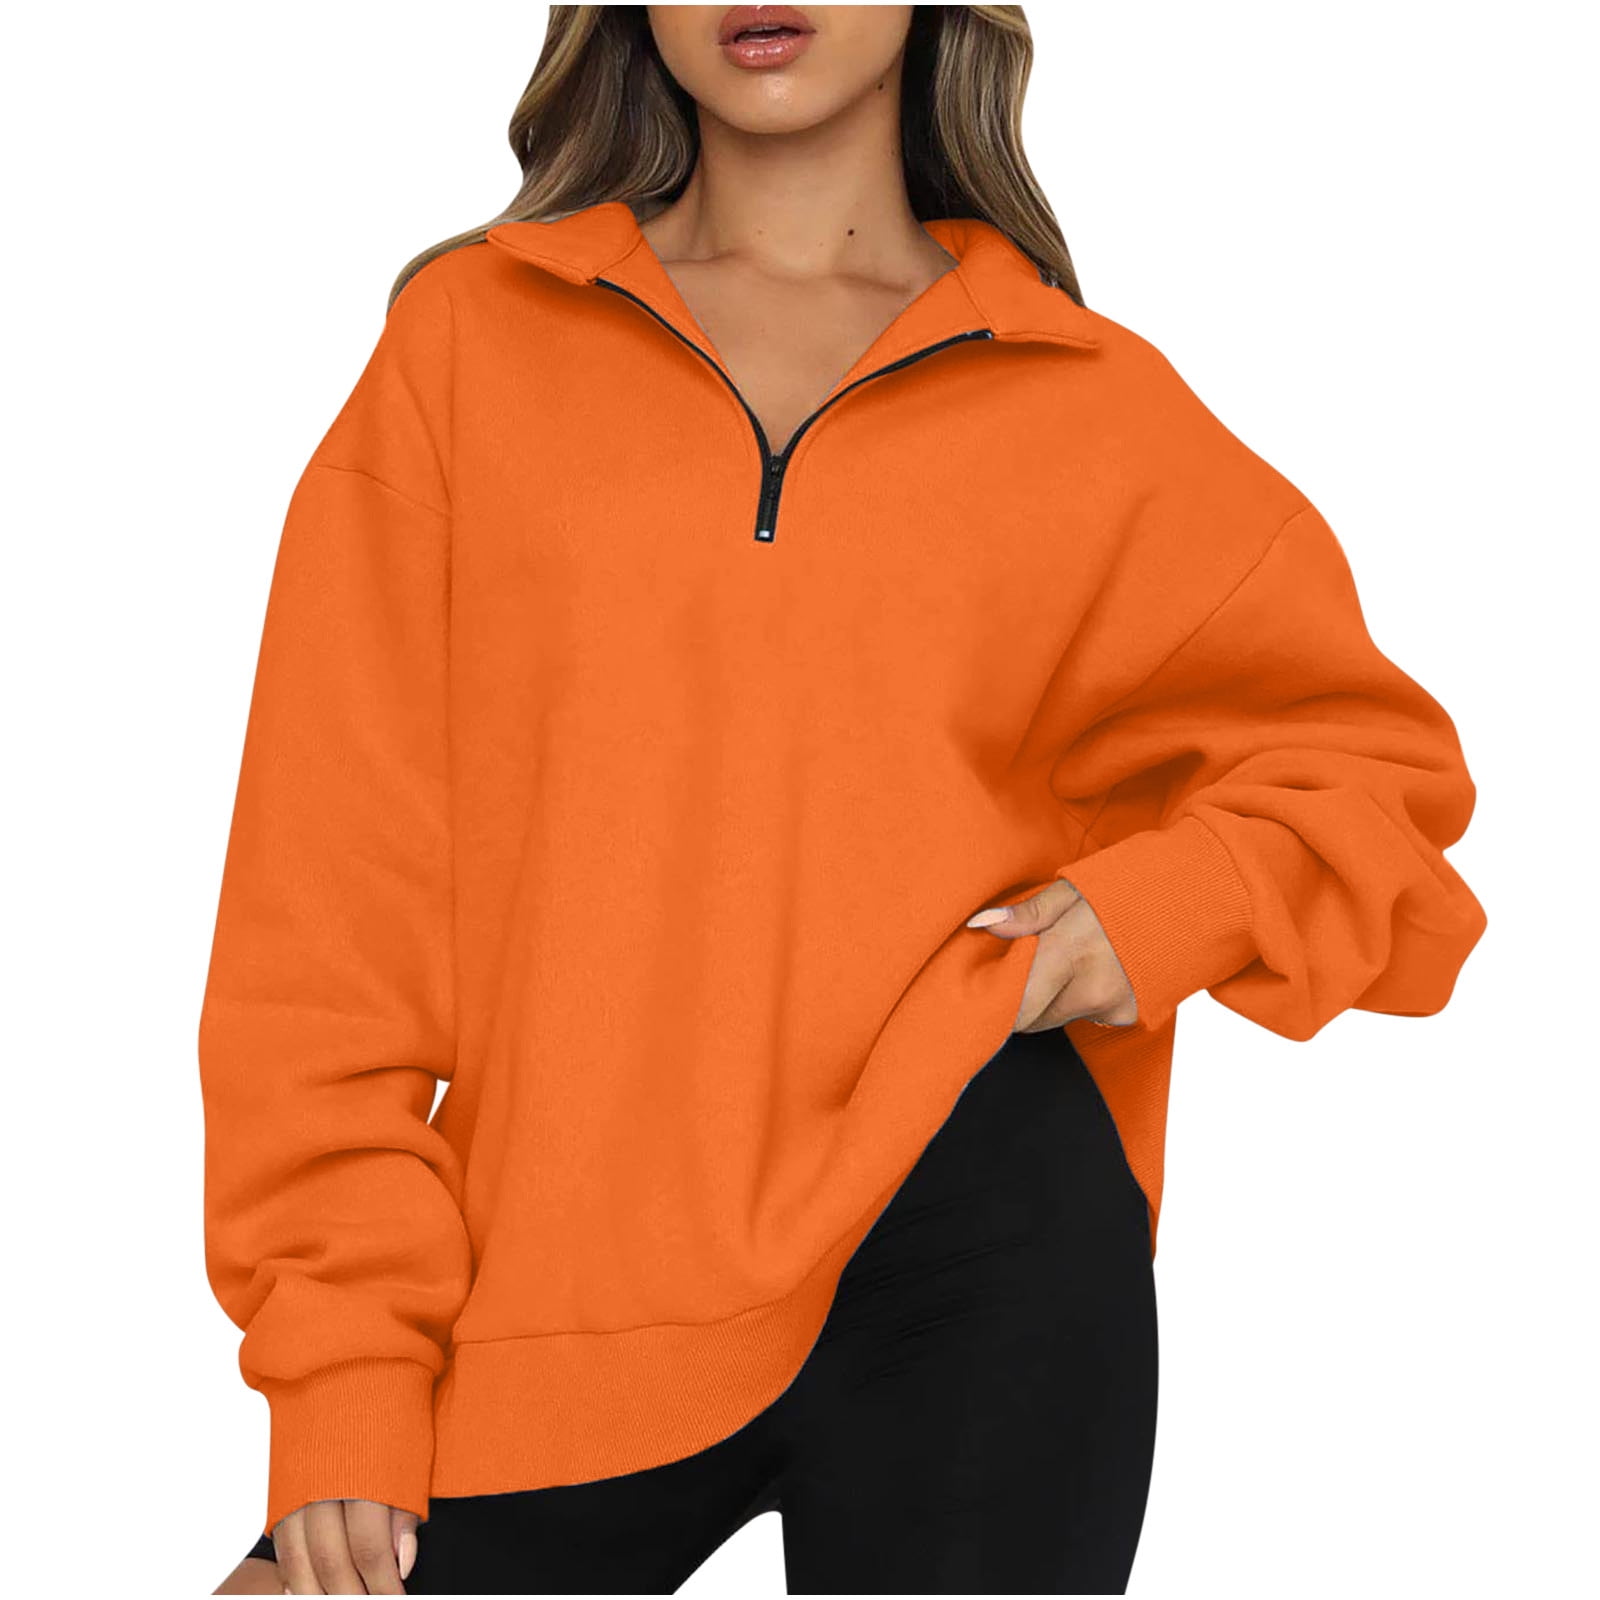 Yyeselk Women's Full Zip Up Hoodie Long Sleeve Solid Color Hooded  Sweatshirts Fleece Jacket Coat Cardigan Hoodies Blouse Shirt Tops Navy XXXXL